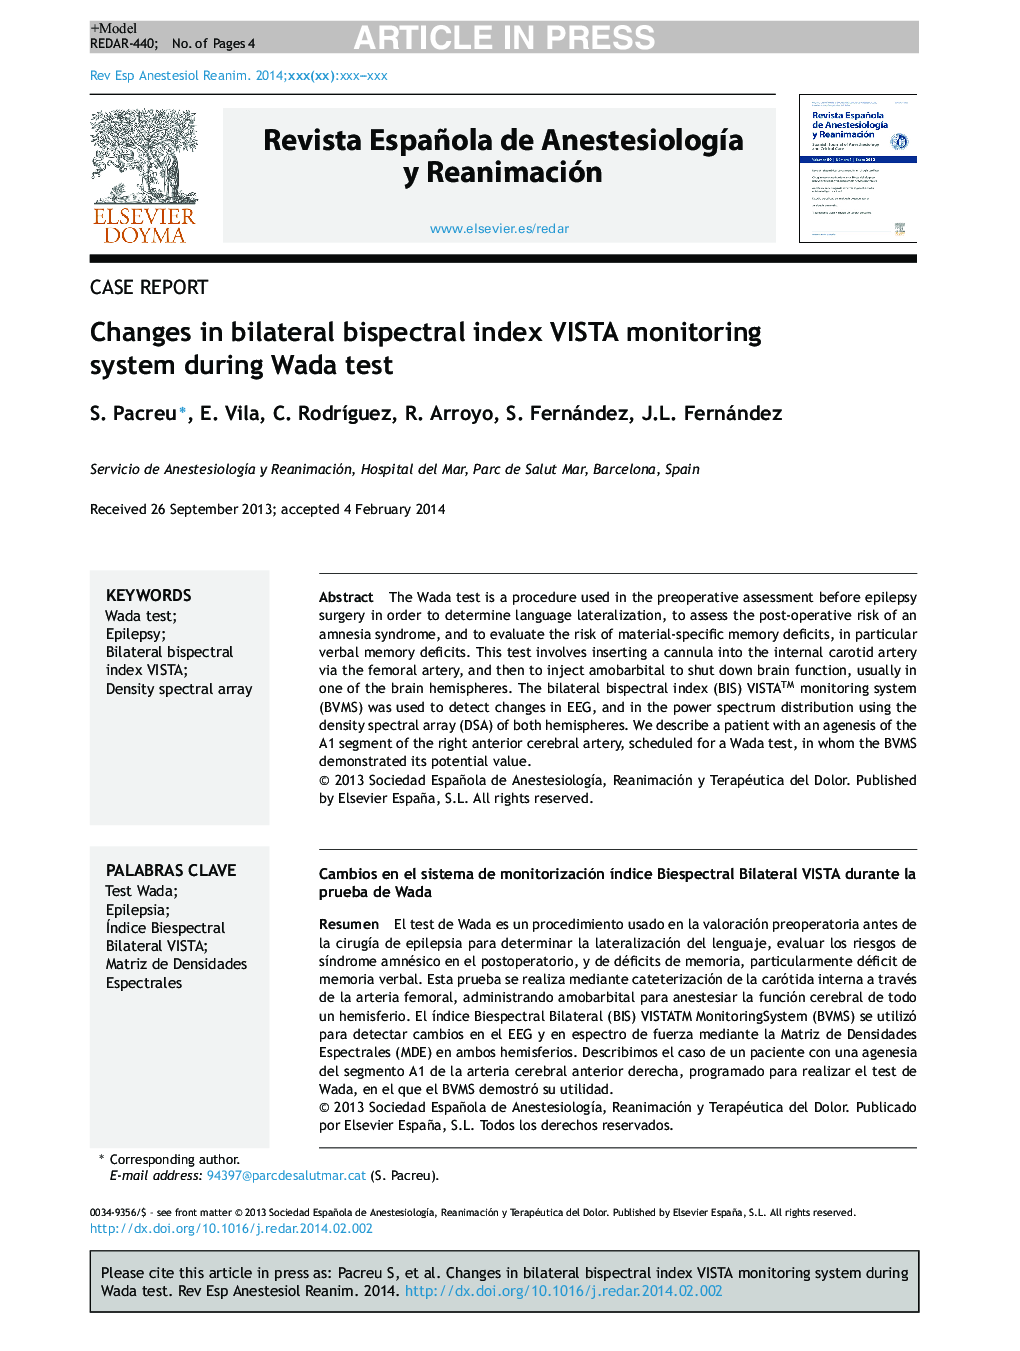 Changes in bilateral bispectral index VISTA monitoring system during Wada test